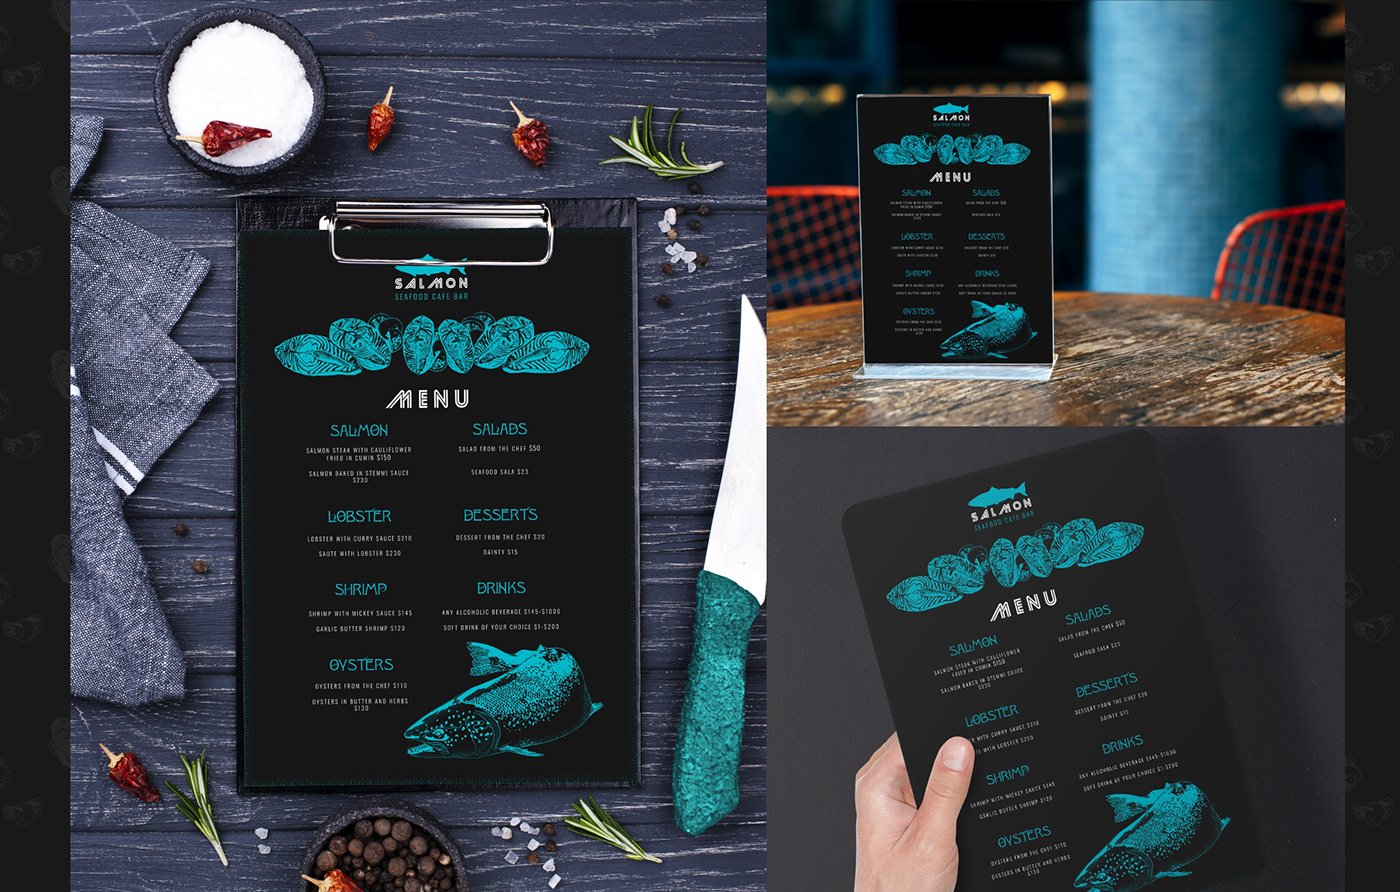 menu design Seafood Logo  cafe bar retro design engraving style salmon fish Food 